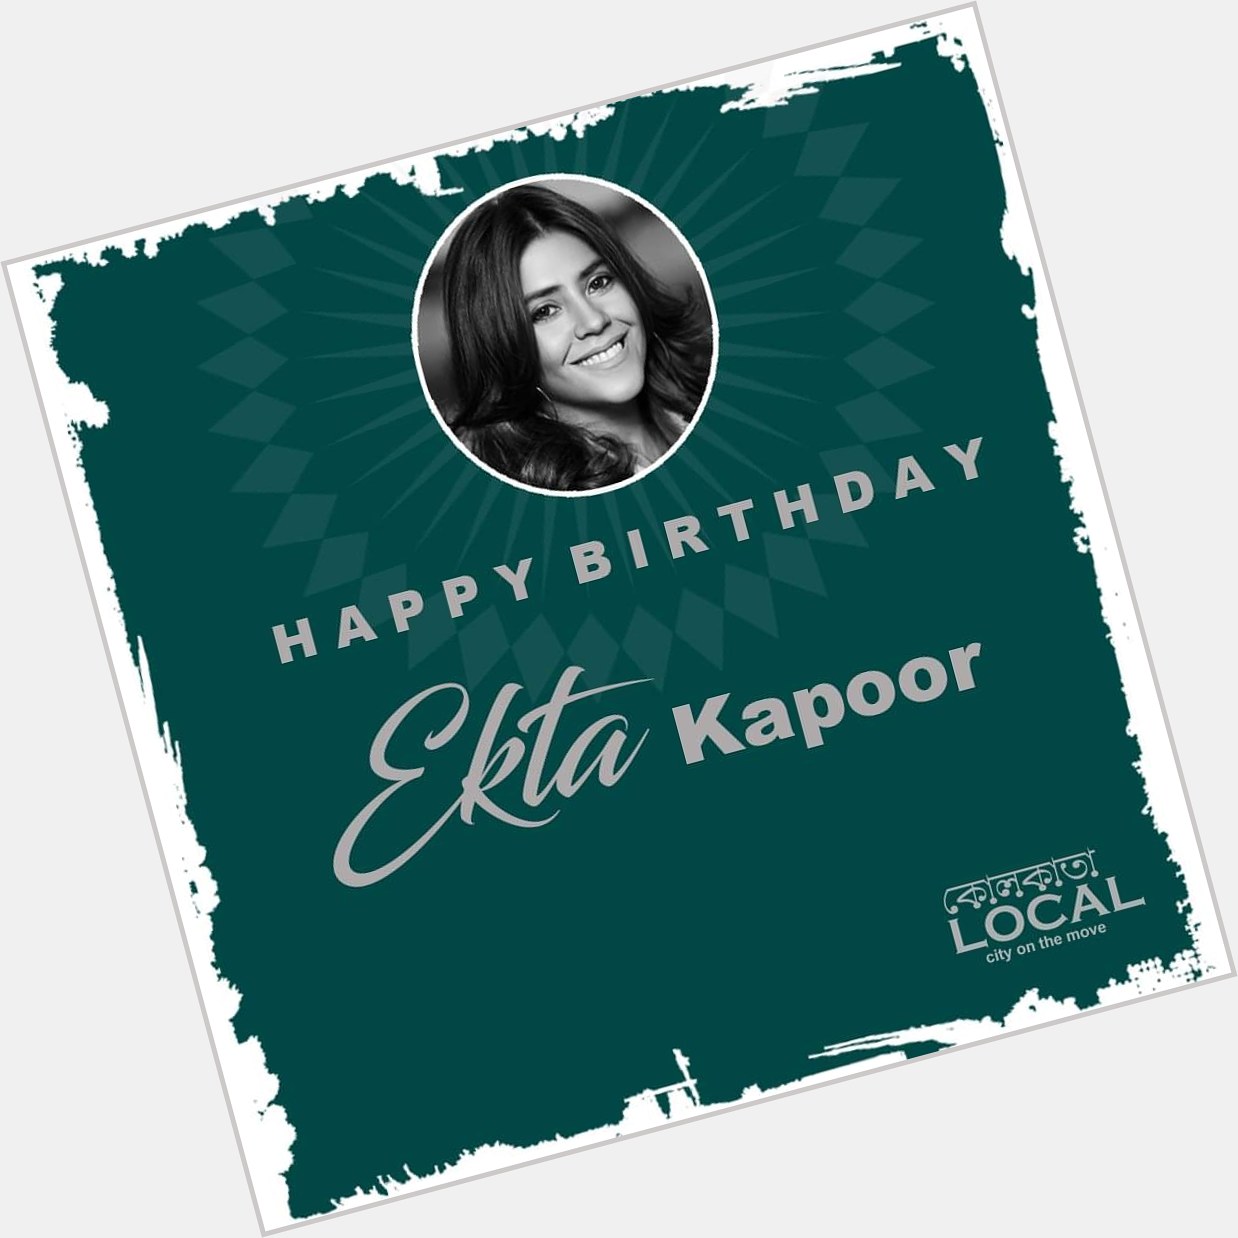 Wishing a very happy birthday Ekta Kapoor 